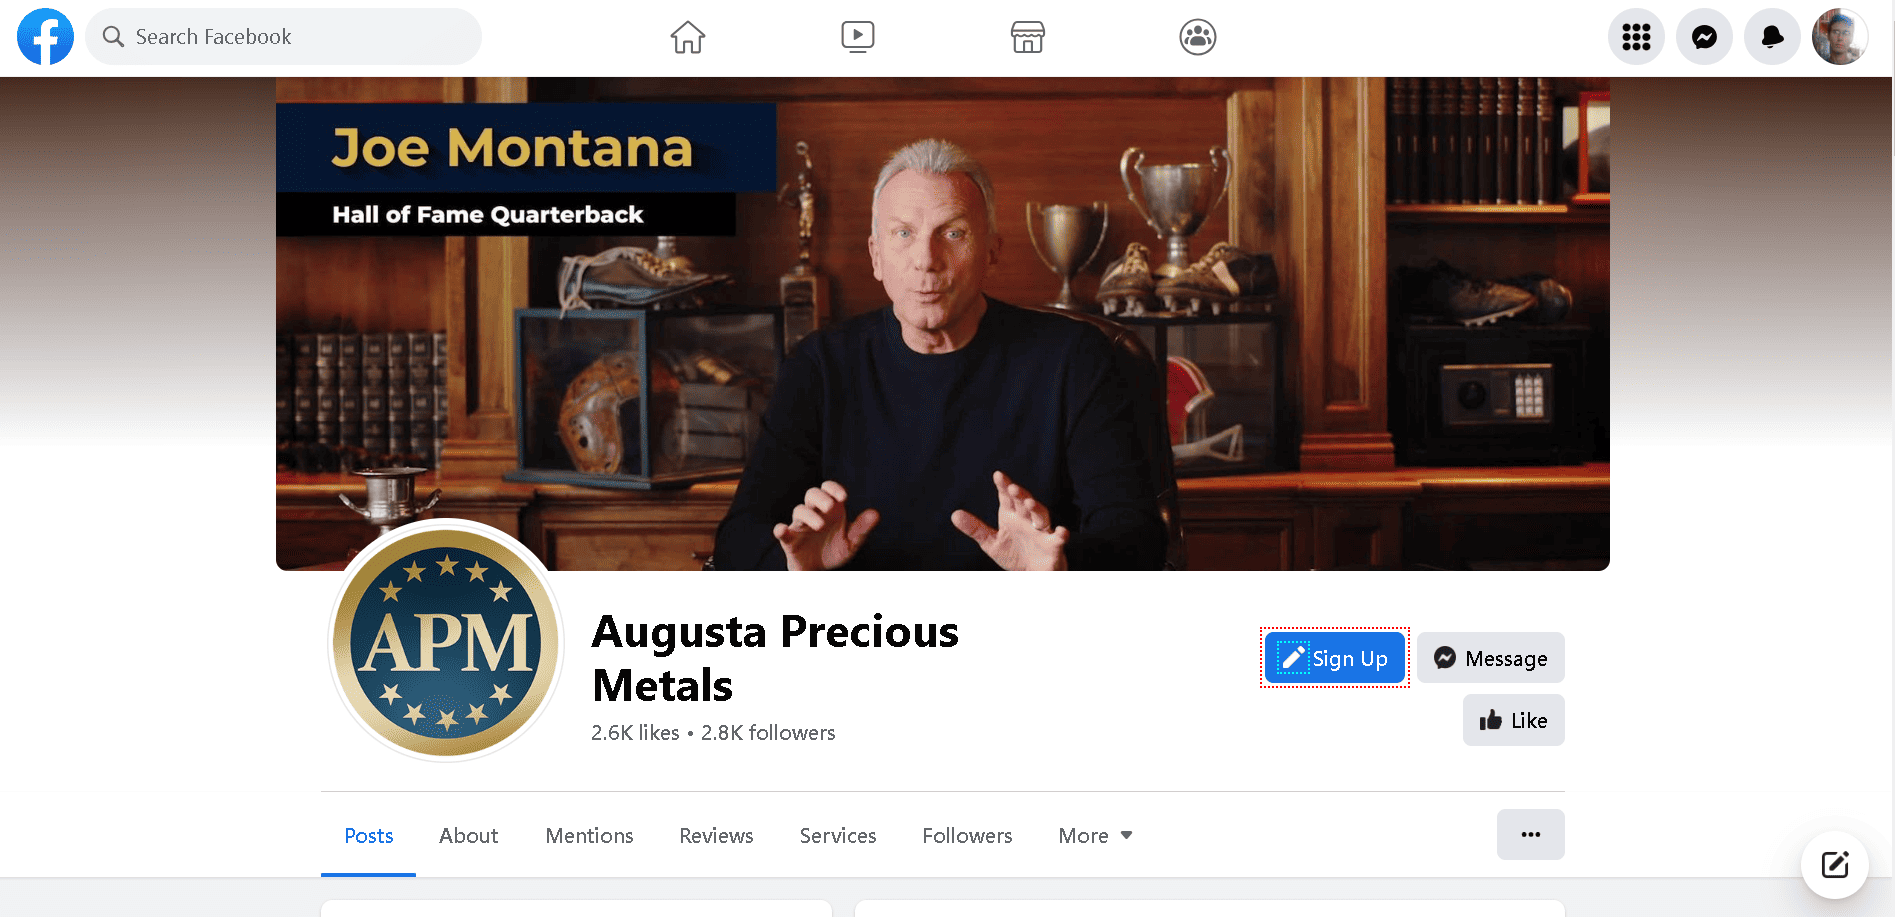 Augusta Precious Metals official Facebook account